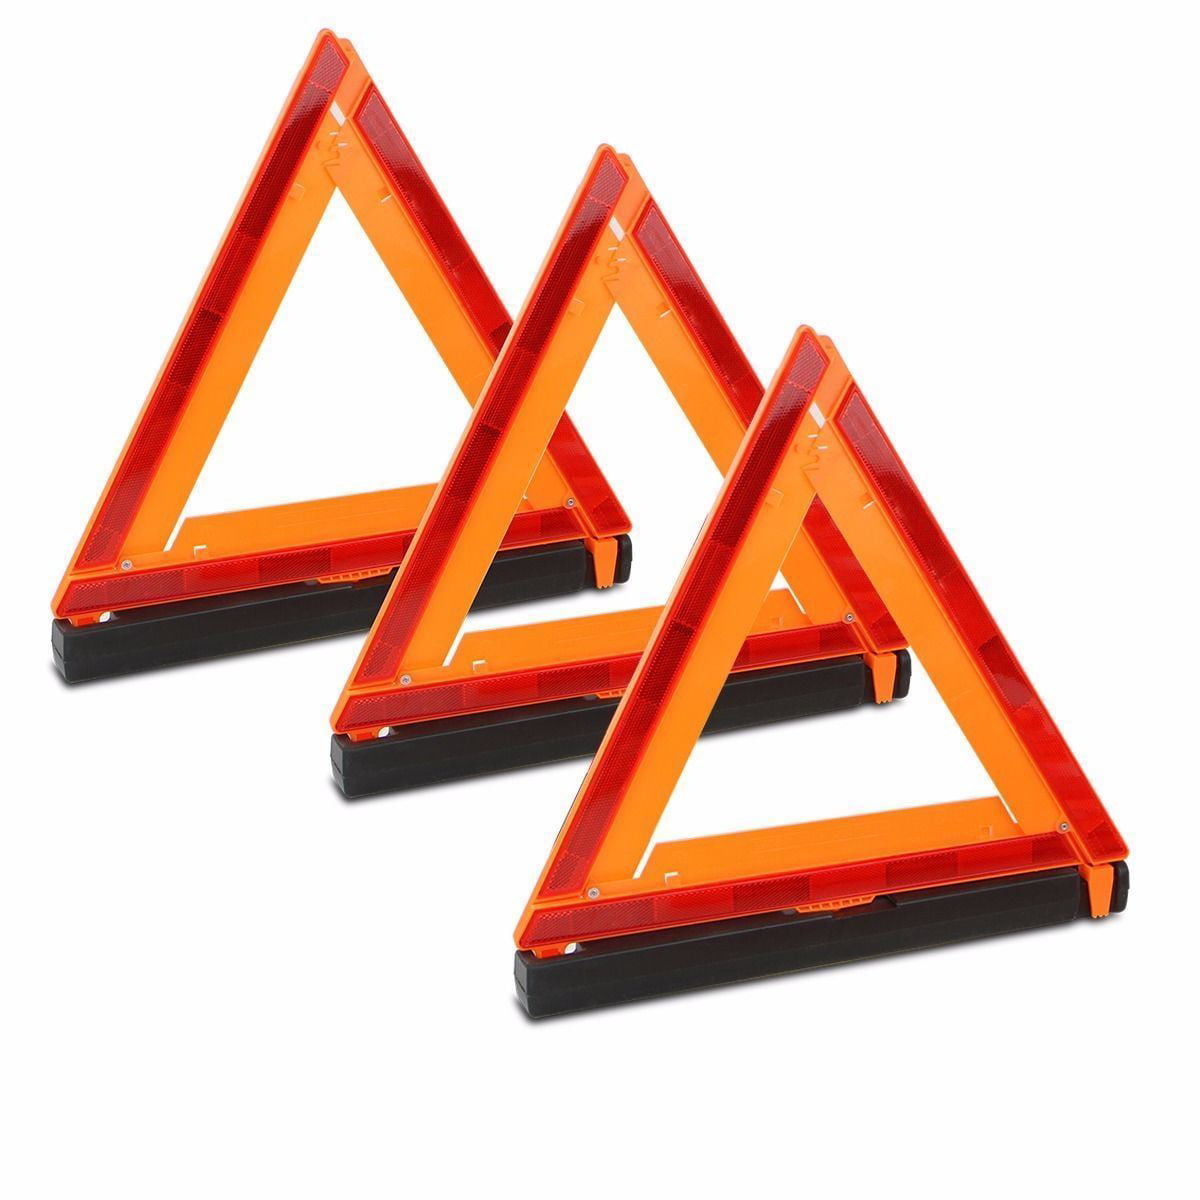 Warning Triangle Safety Triangle Triple Warning Reflector Roadside Hazard Sign 